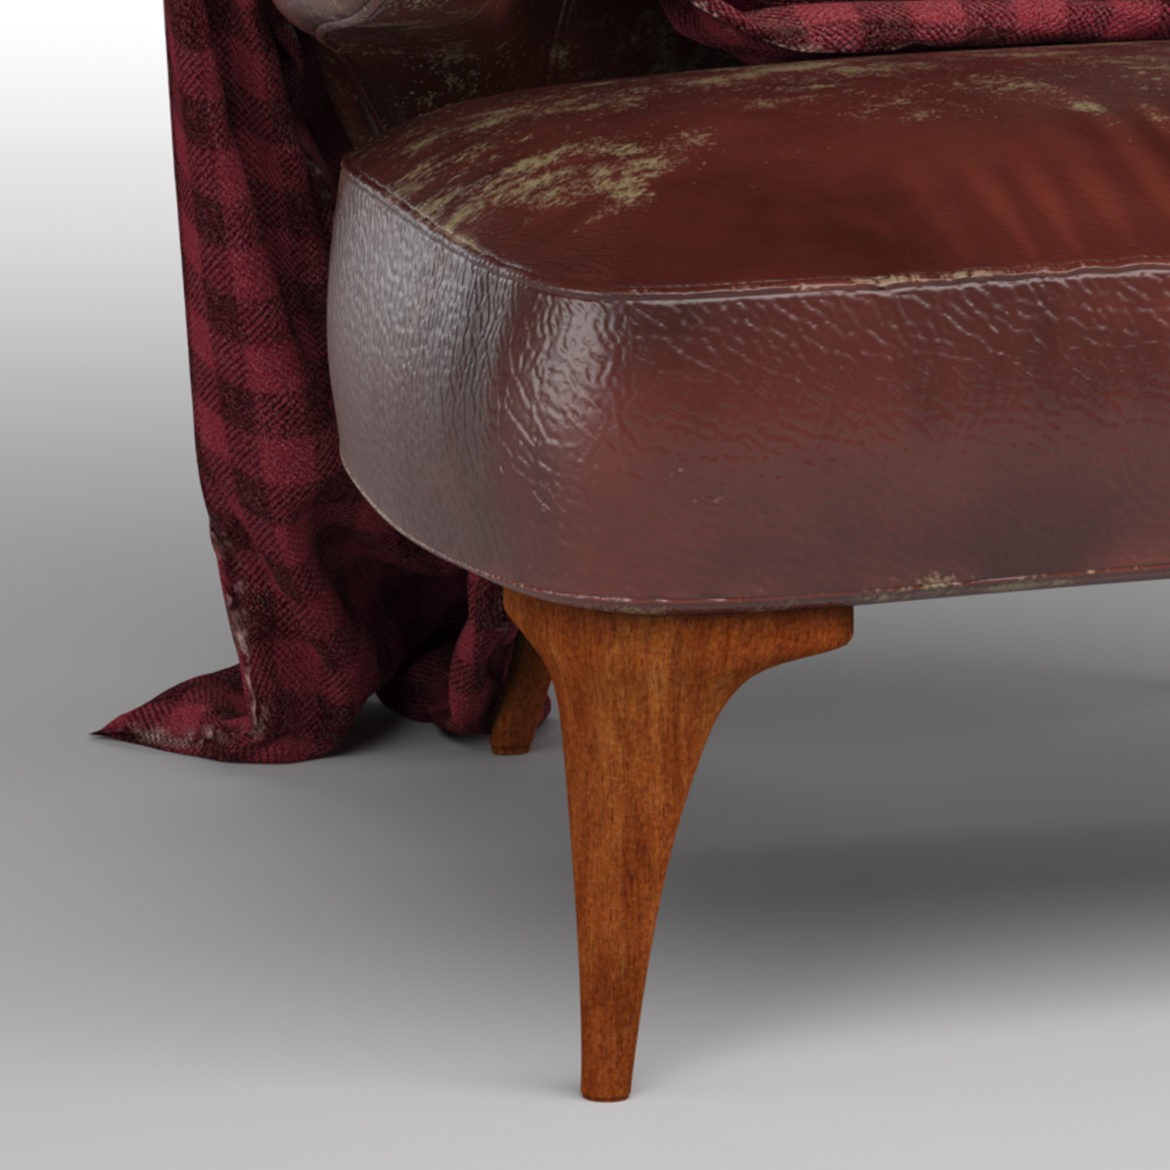  <a class="continue" href="https://www.flatpyramid.com/3d-models/furniture-3d-models/old-leather-armchair/">Continue Reading<span> Old leather armchair</span></a>